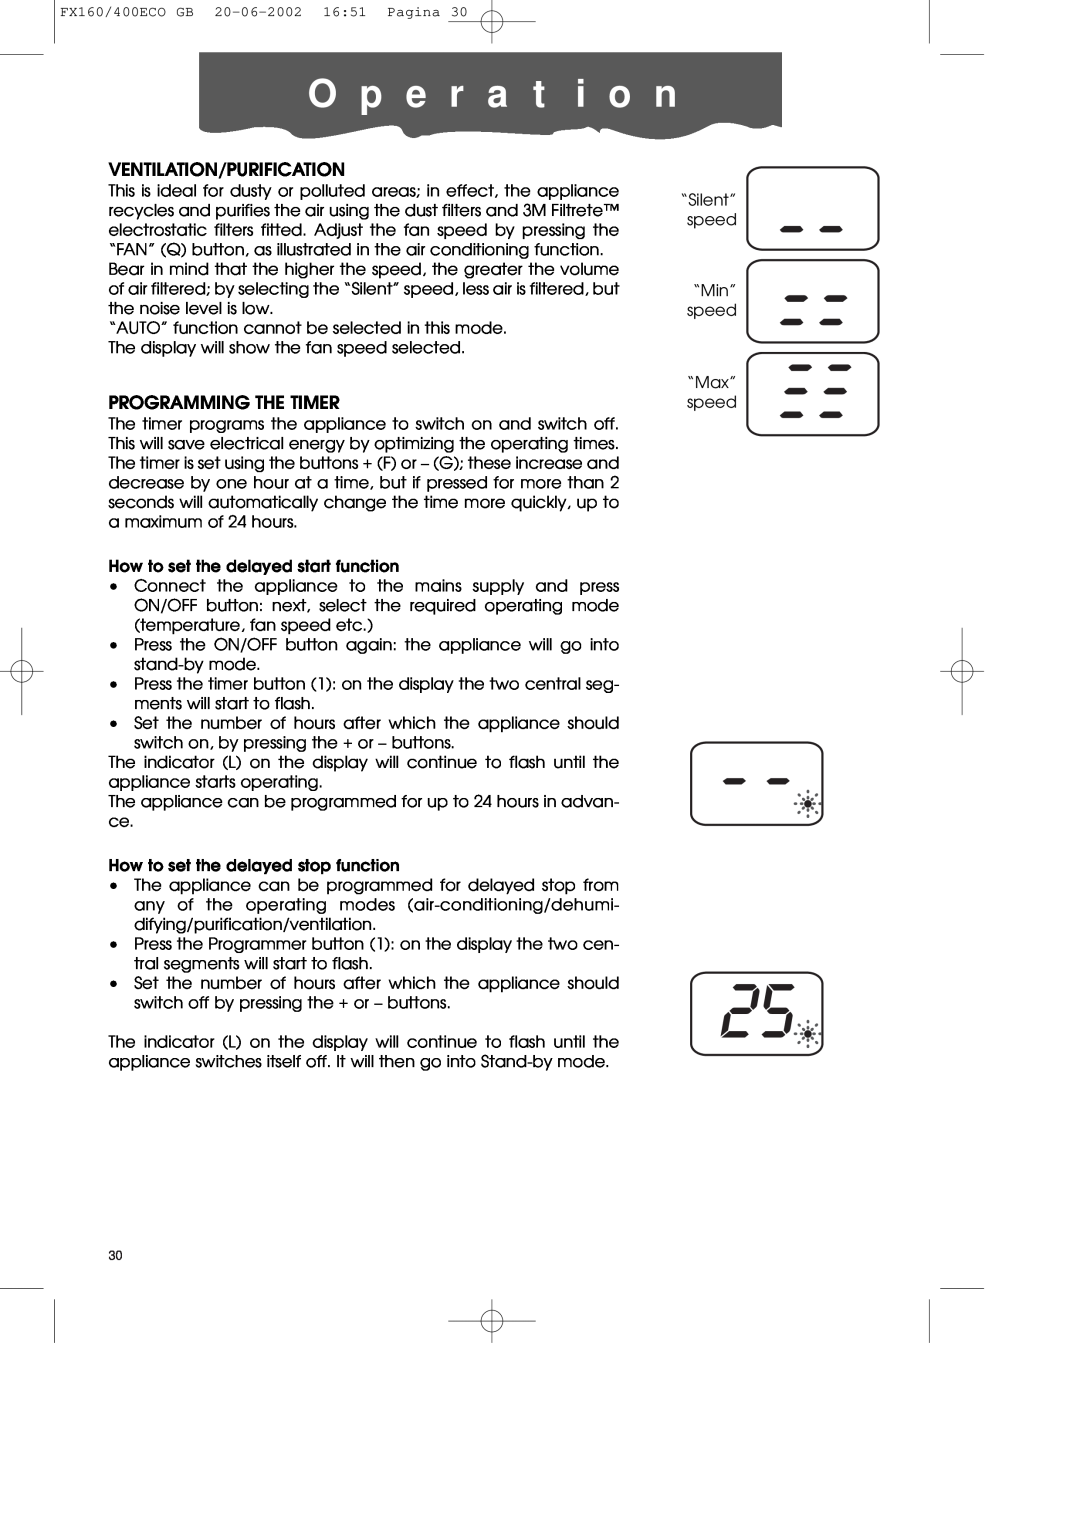 DeLonghi FX400ECO manual Ventilation/Purification, Programming The Timer, O p e r a t i o n 